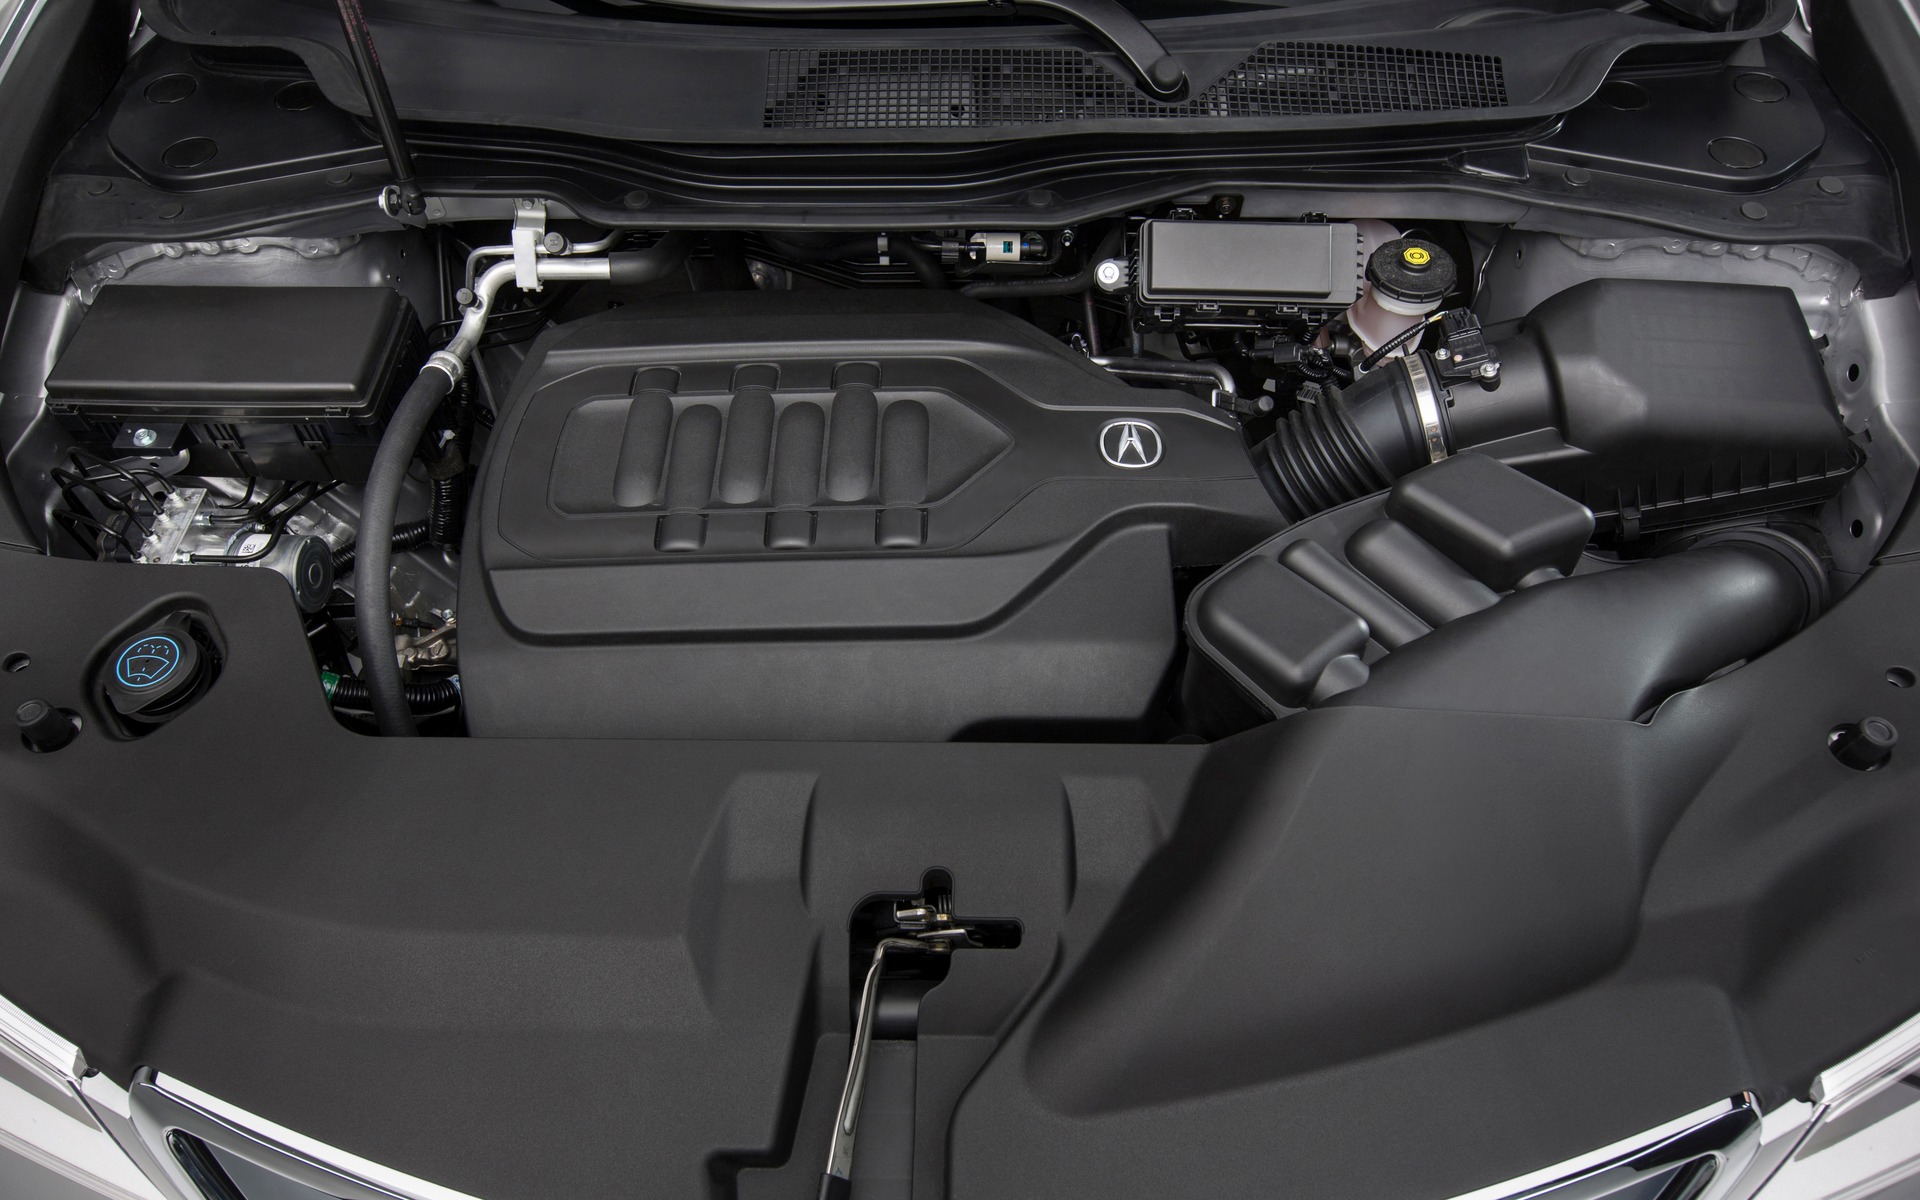 All four trims come with the same 3.5-litre V6 with 290 horsepower.